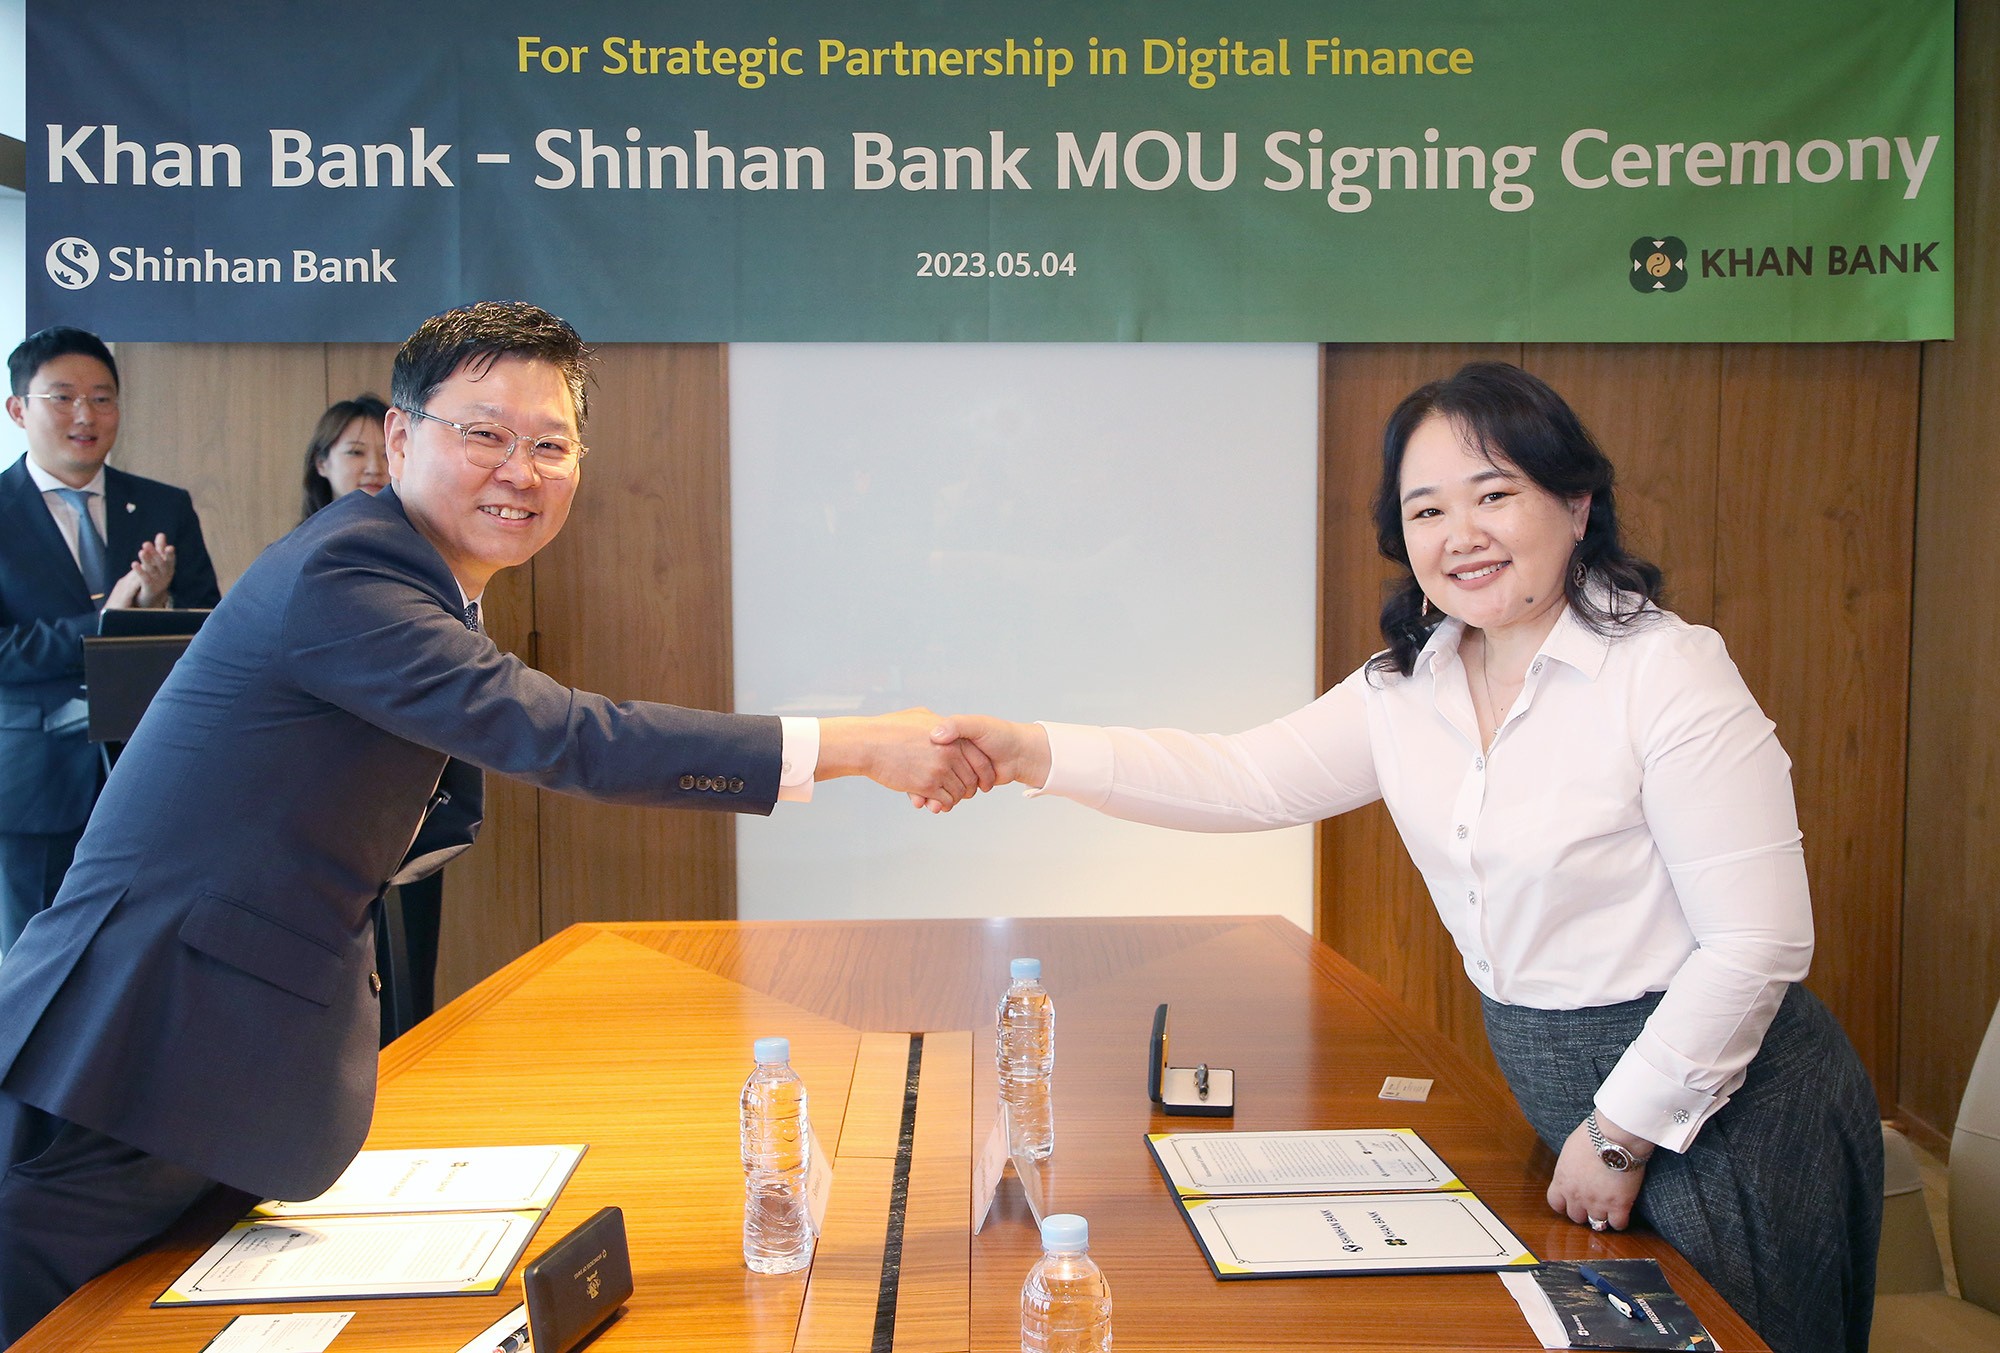 Shinhan Bank Participates in ADB Annual Meeting in Incheon as